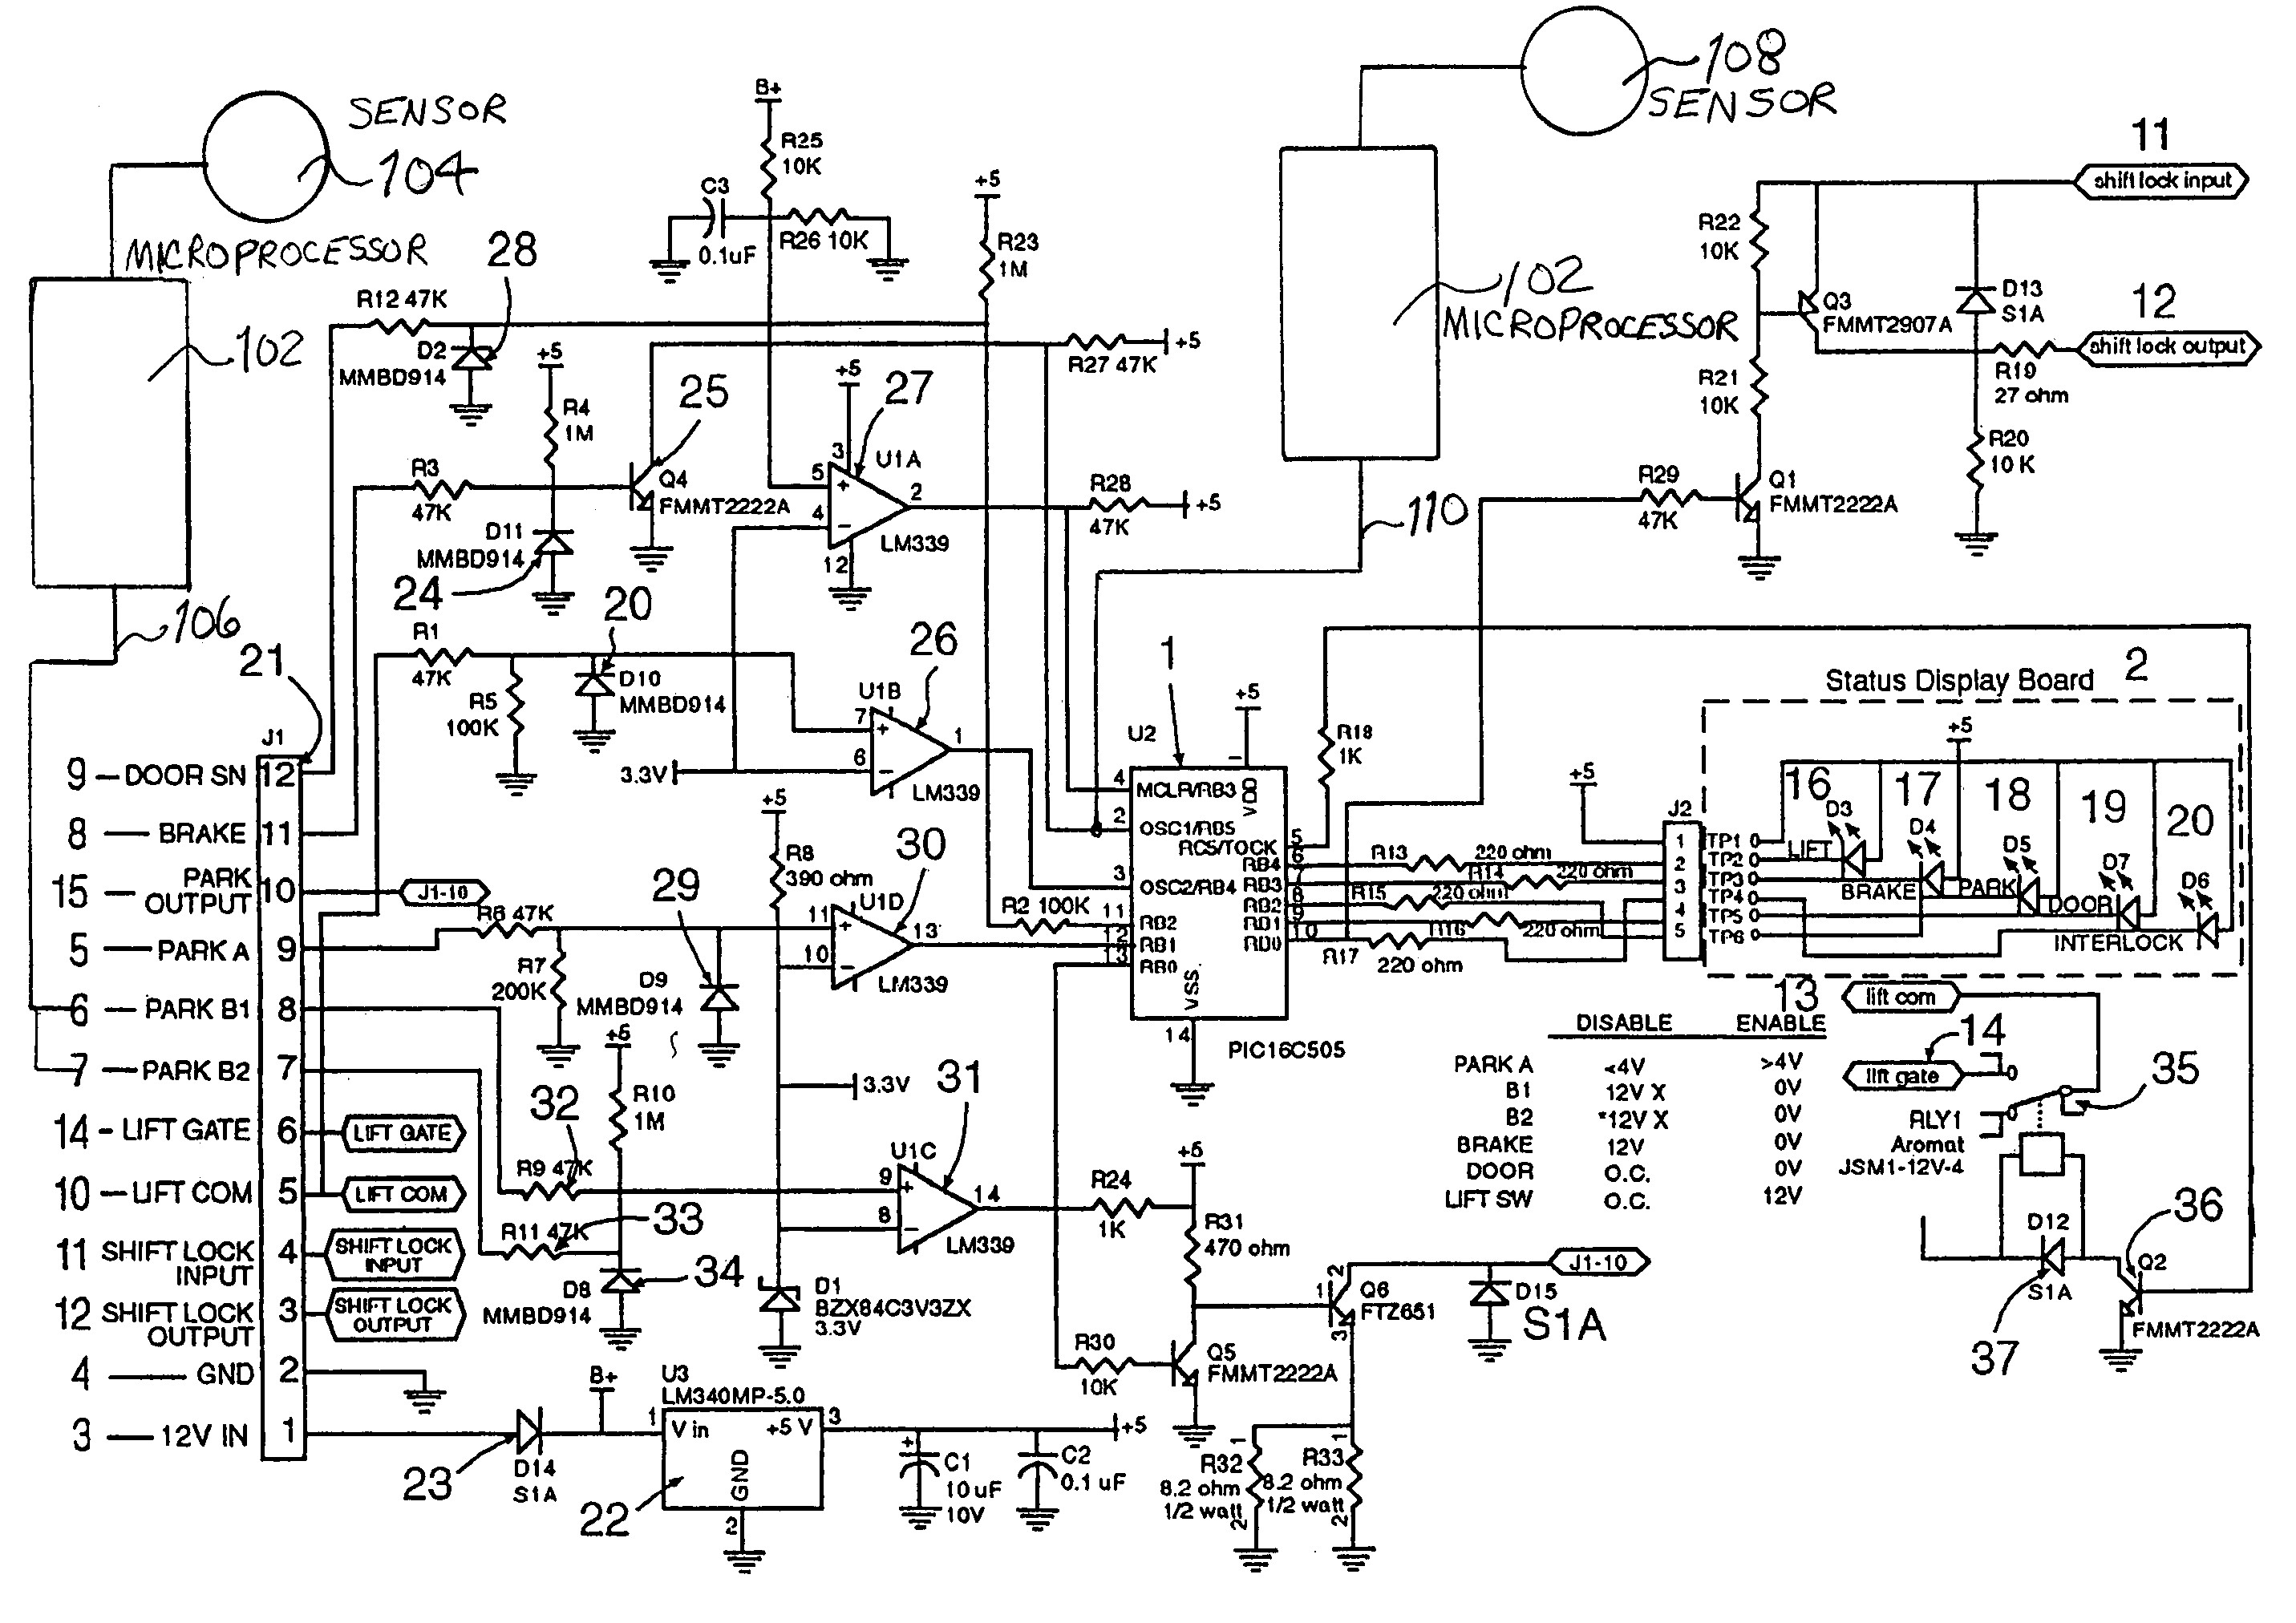 jlg-scissor-lift-wiring-diagram-inspirational-snorkel-lift-wiring-wire-center-e280a2-of-jlg-scissor-lift-wiring-diagram.jpg